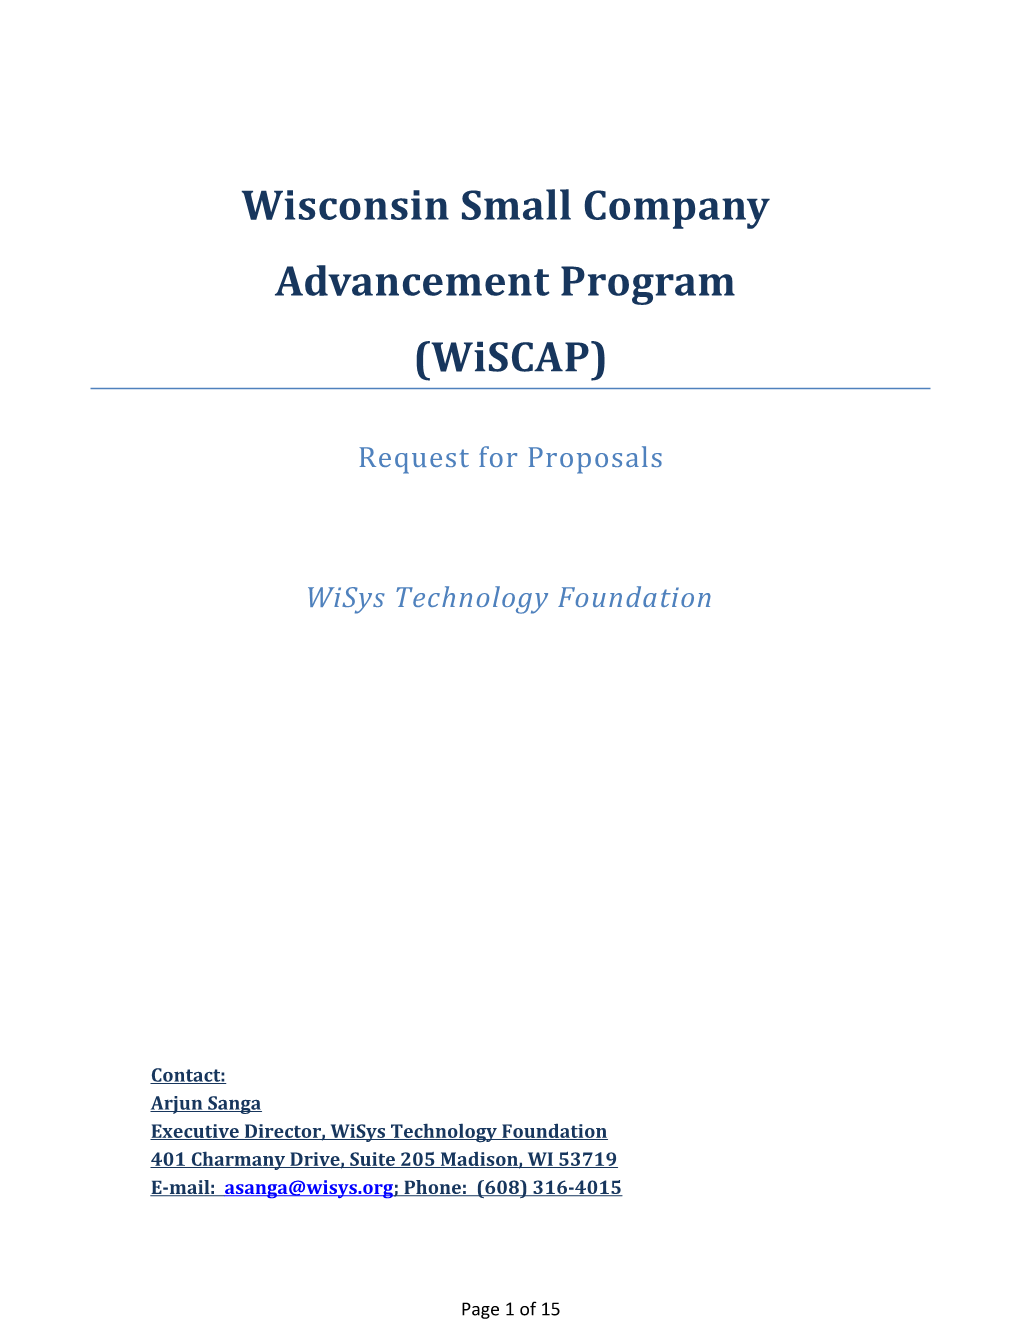 Wisconsin Small Company Advancement Program (Wiscap)